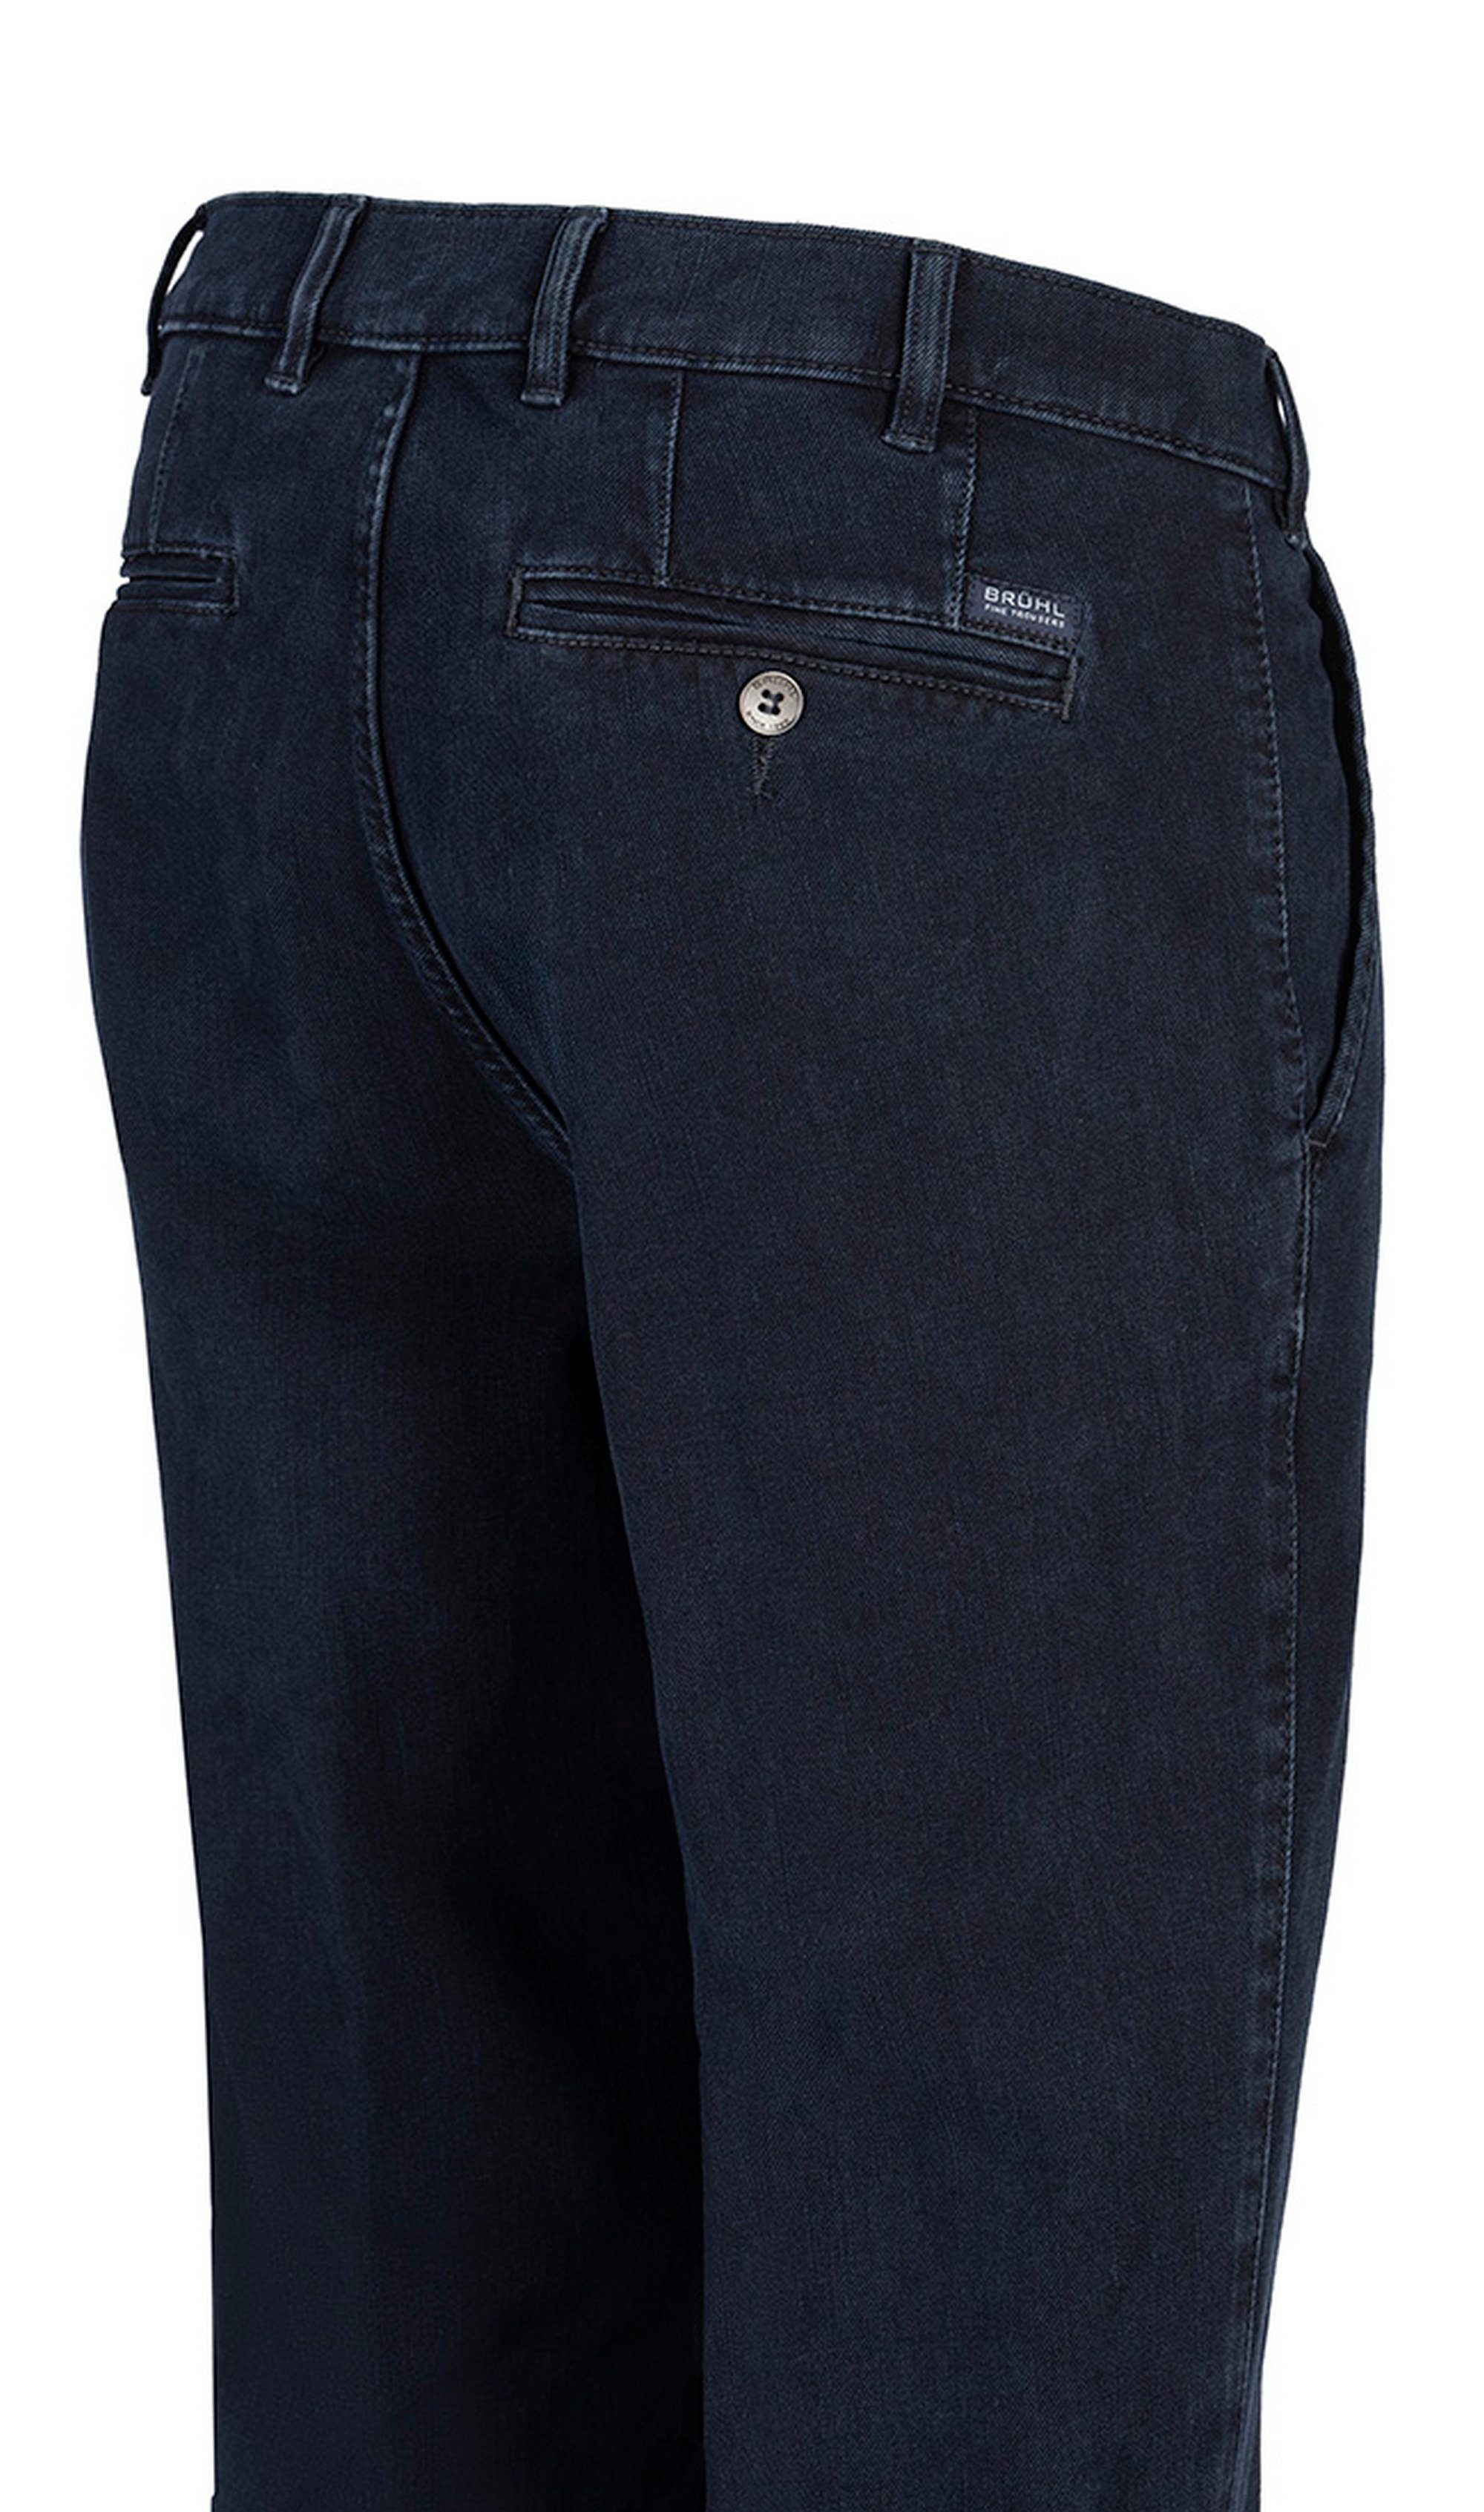 Brühl Bequeme mit Parma DO Tragekomfort Jeans optimalem dunkelblau